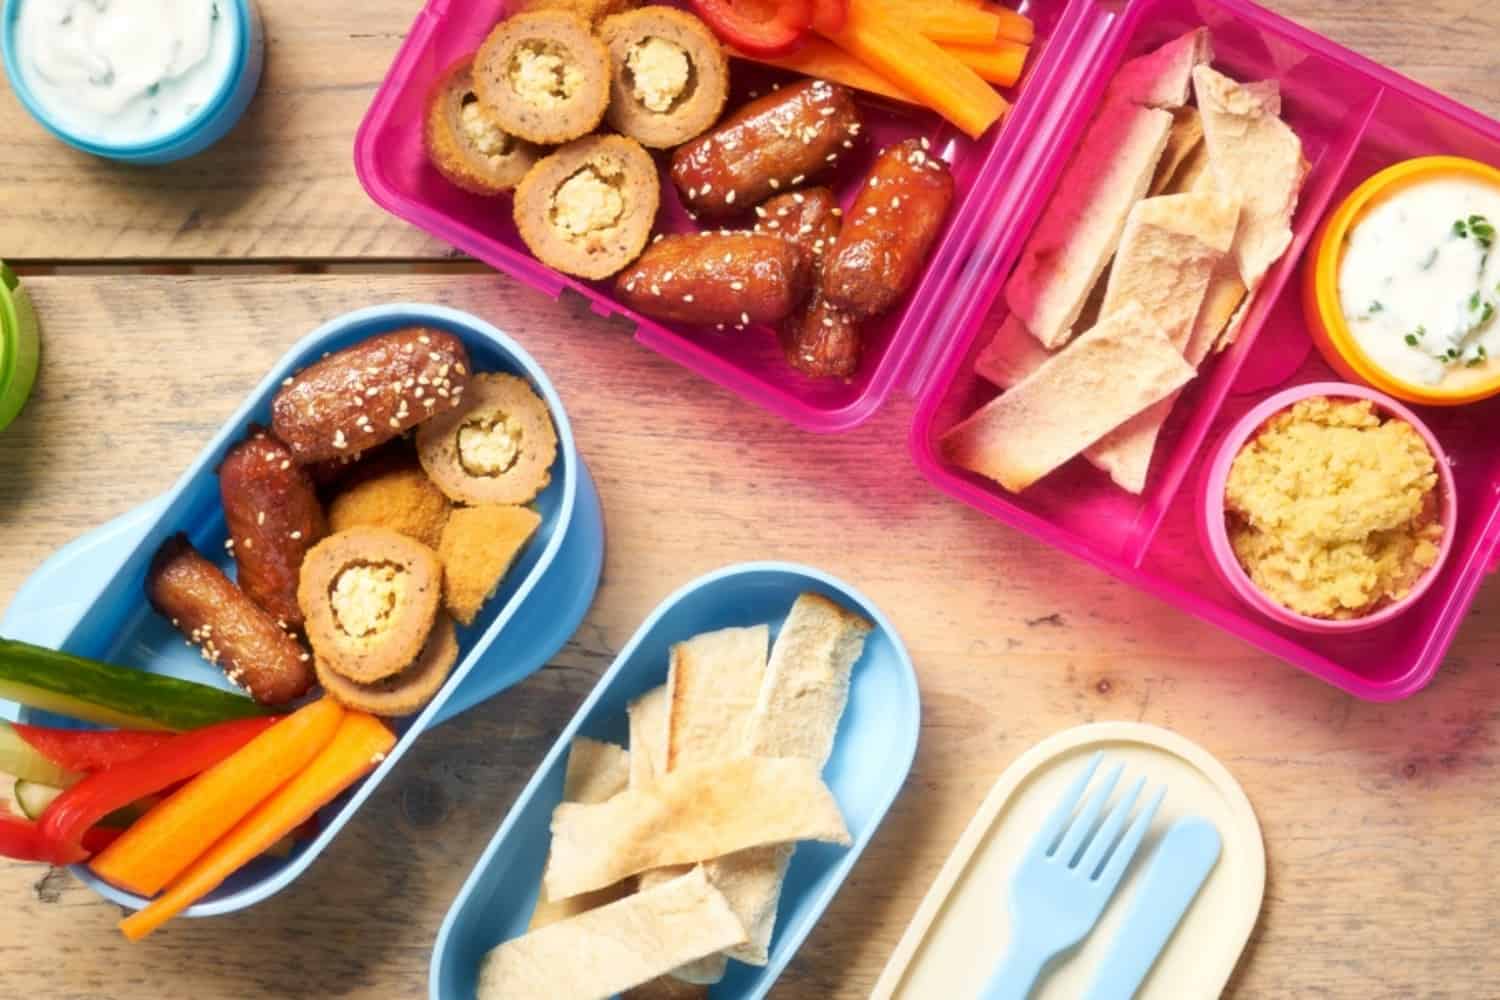 Tempat Makan (Lunch Box) untuk Anak Lucu Unik